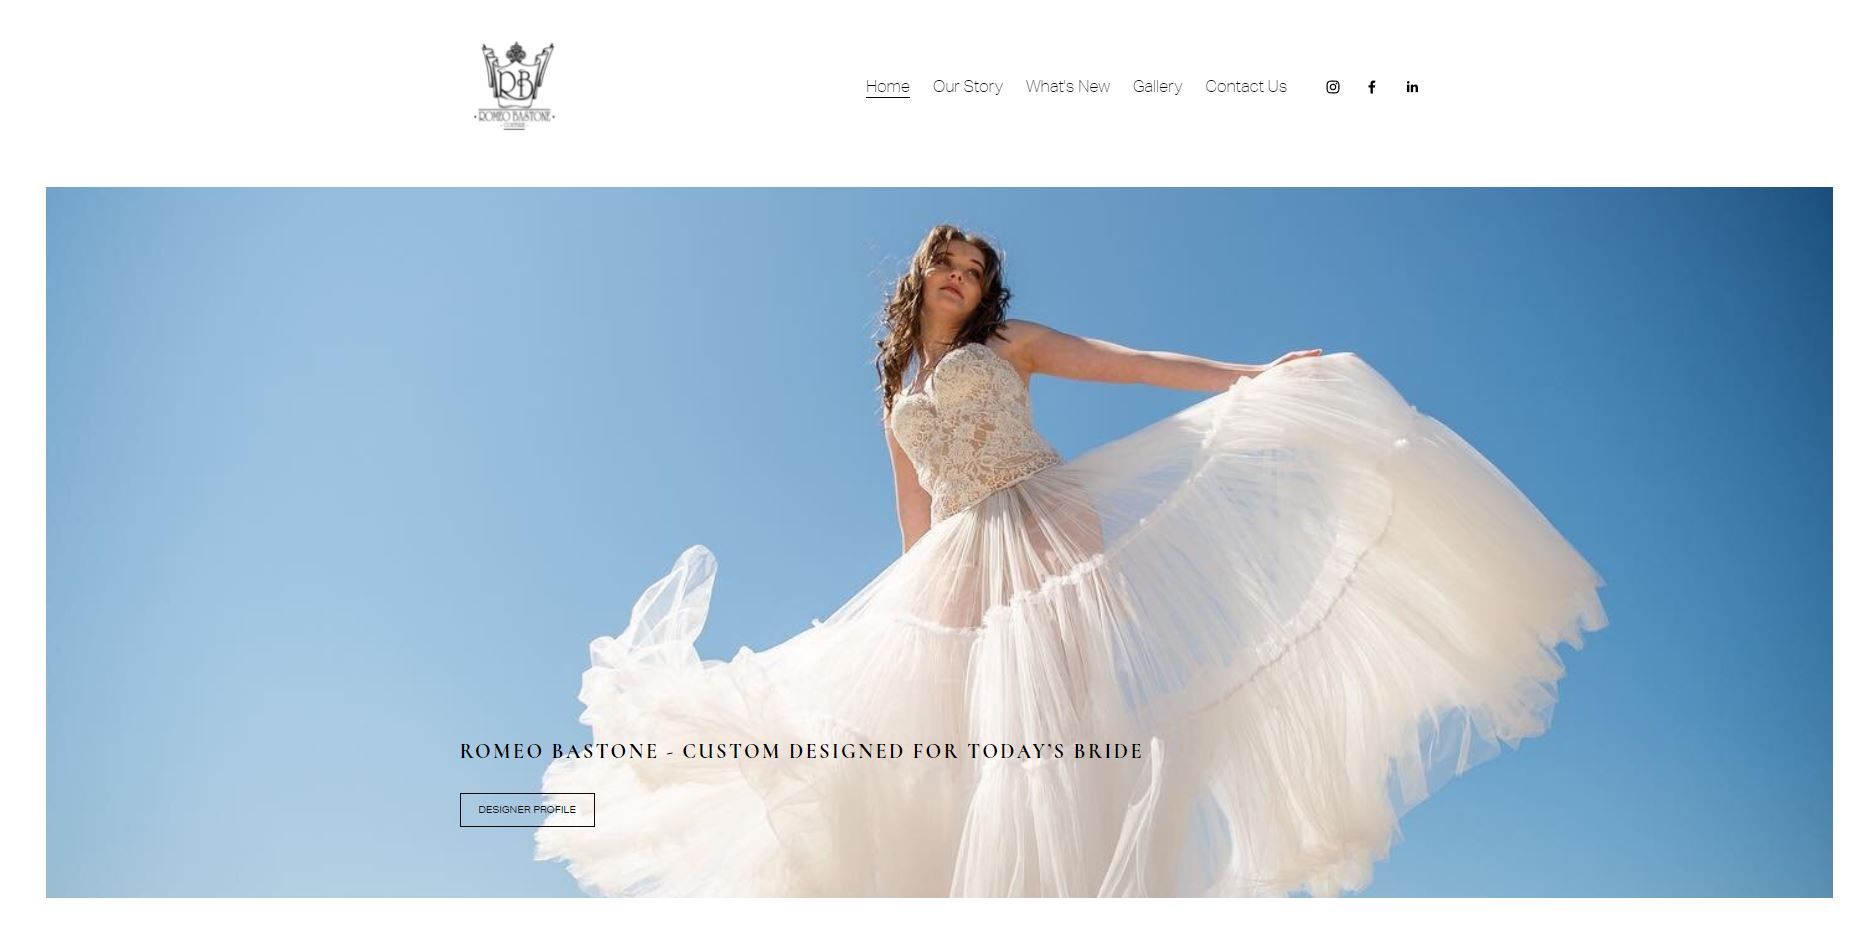 Romeo Bastone Affordable Wedding Dress Shops Melbourne